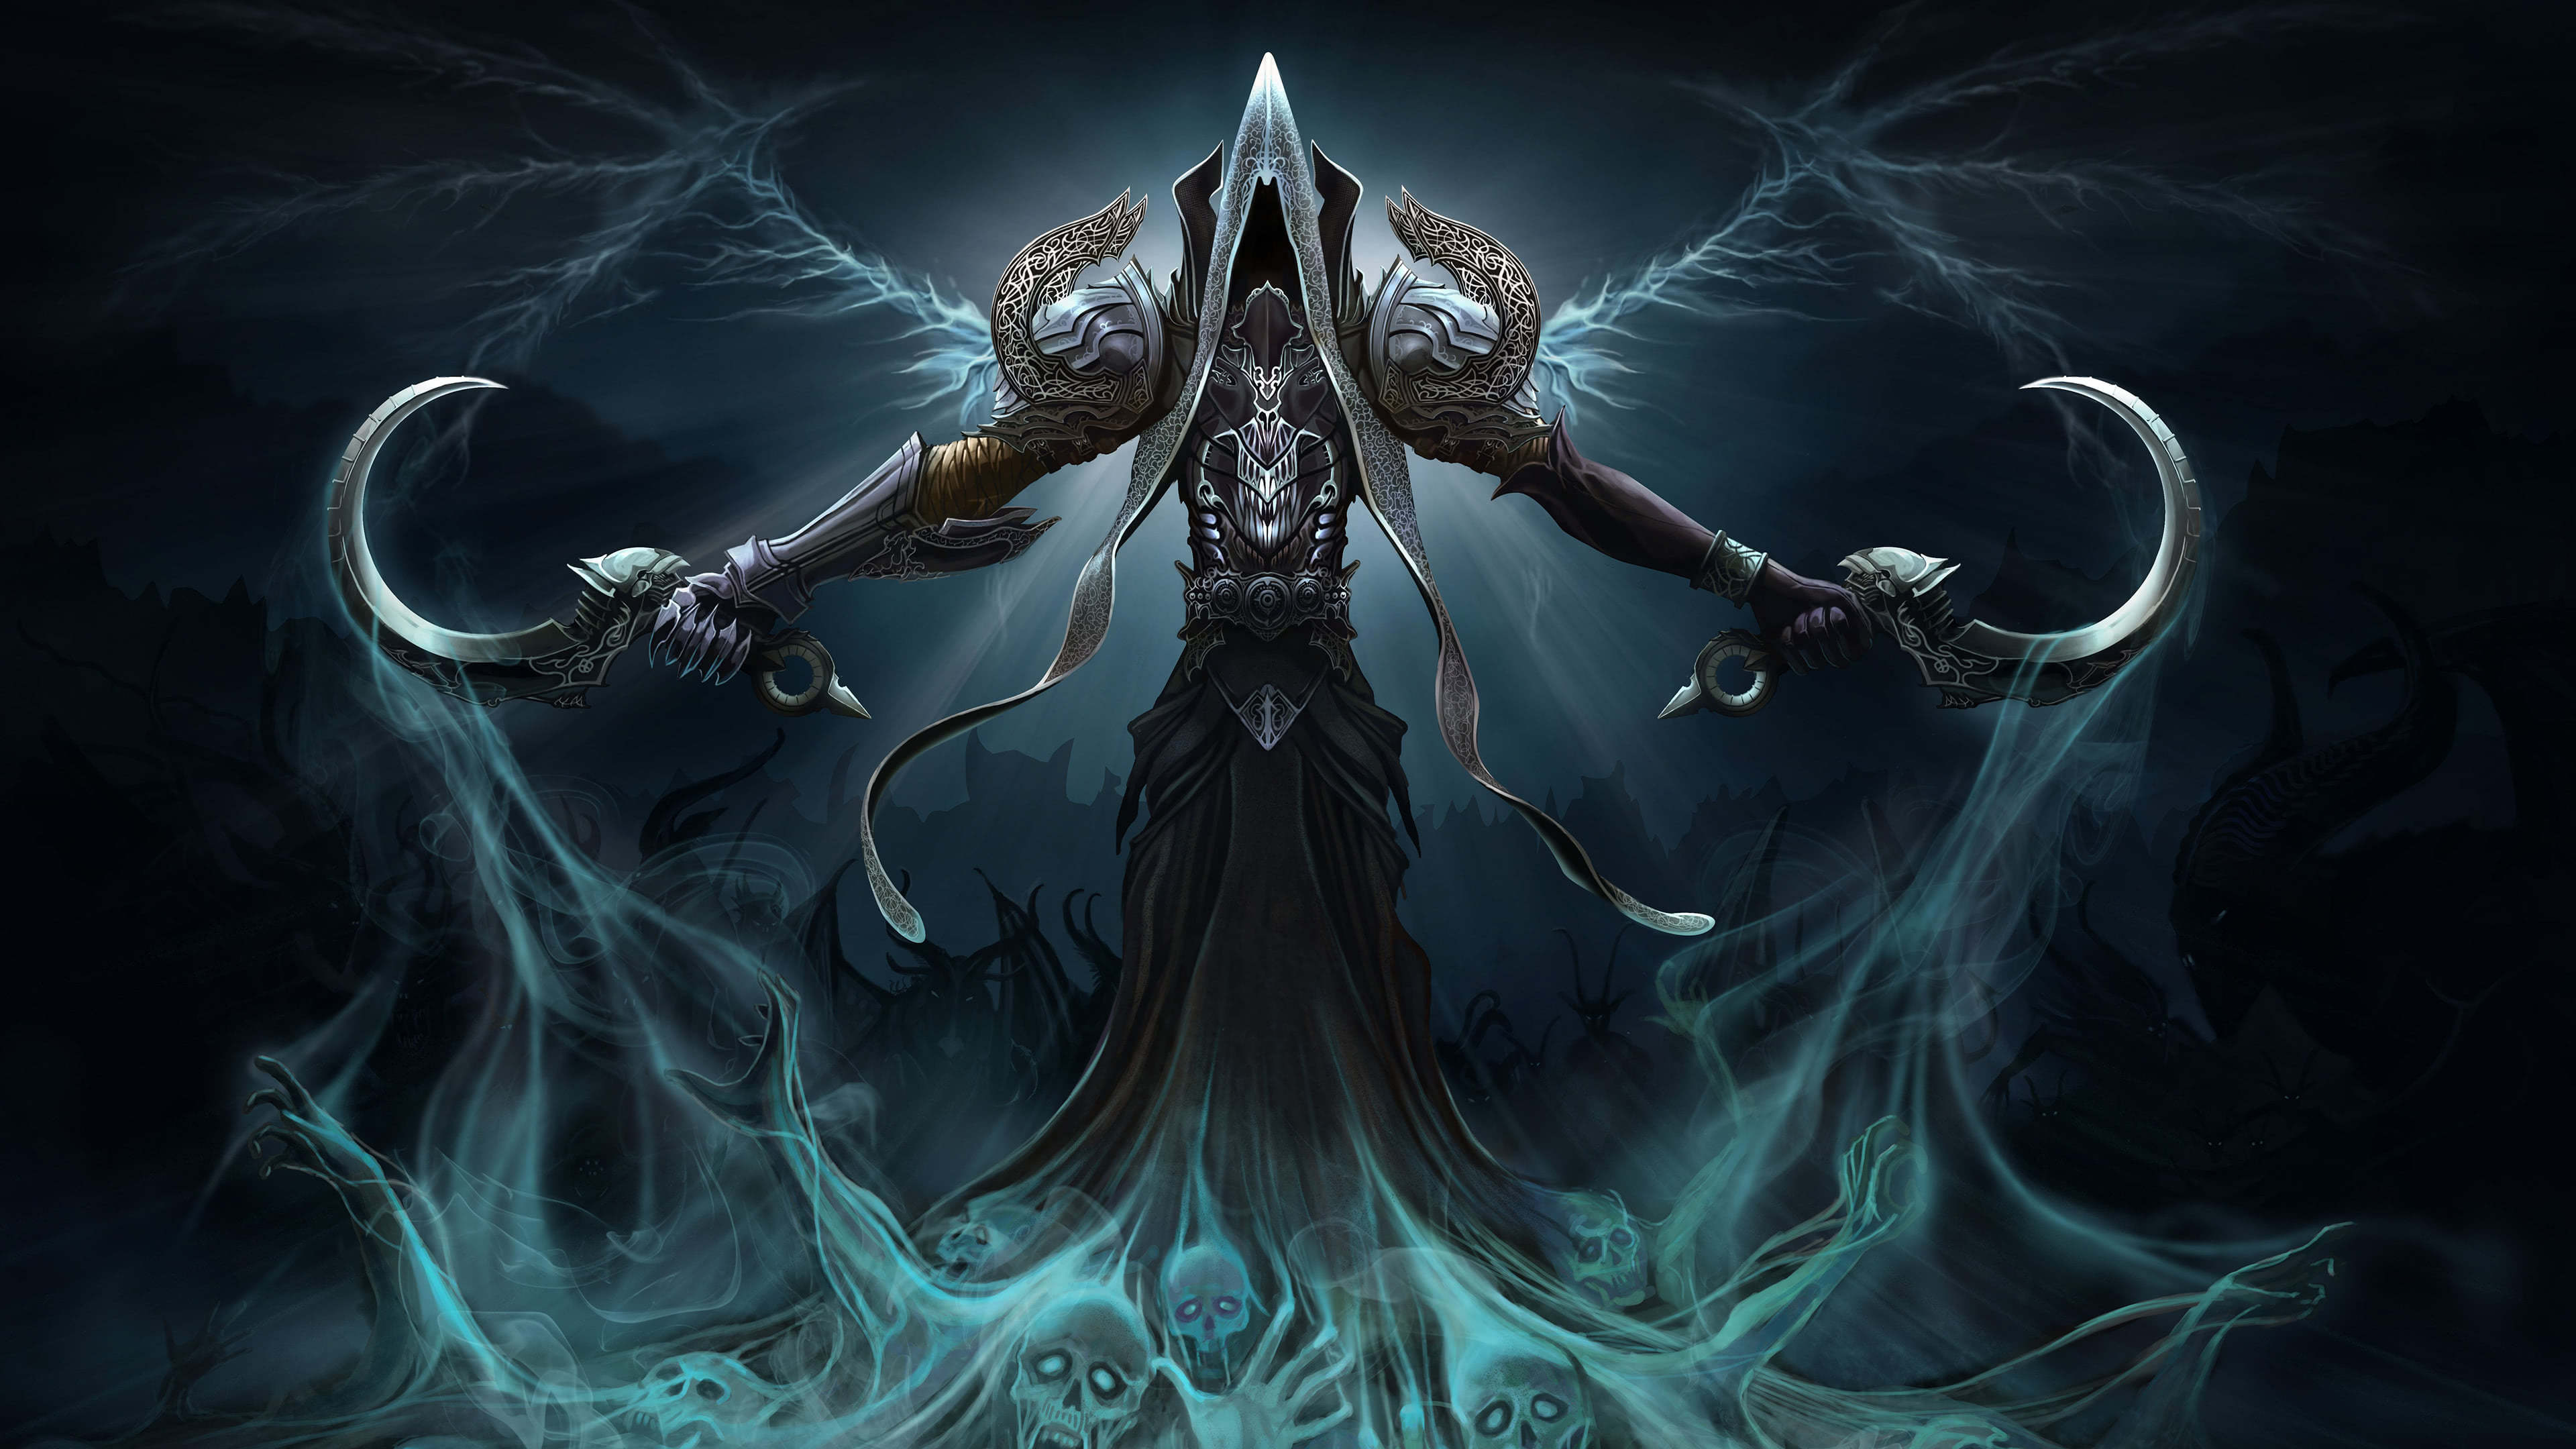 Diablo 3 Reaper Of Souls Wallpapers